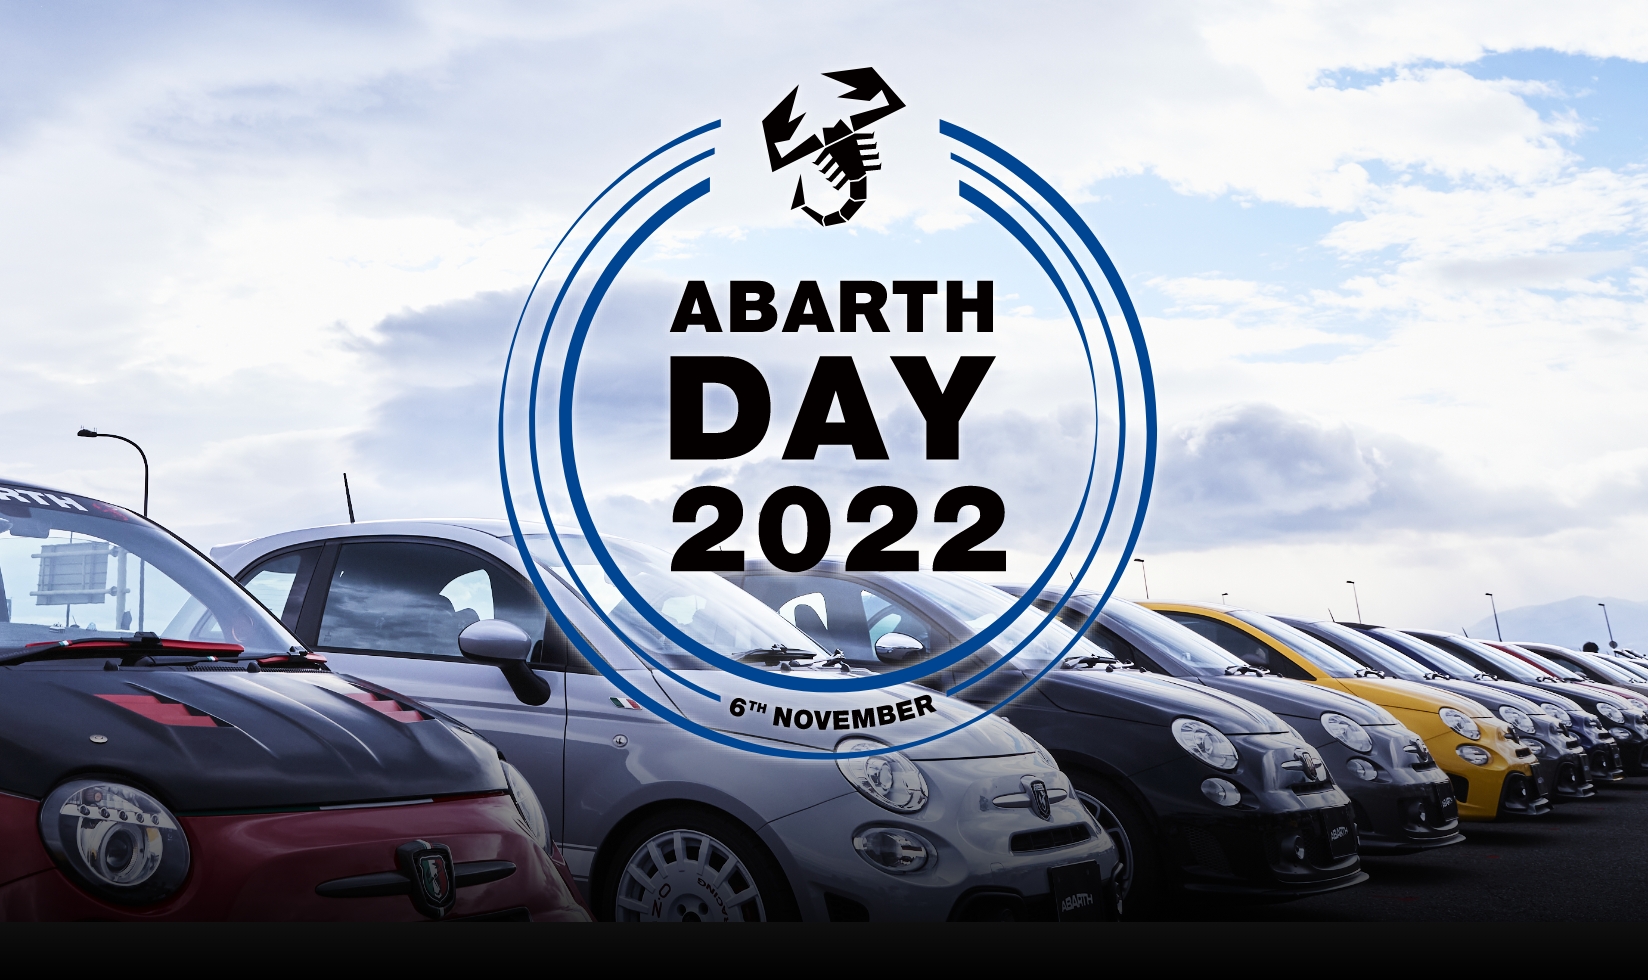 ABARTH DAY 2022